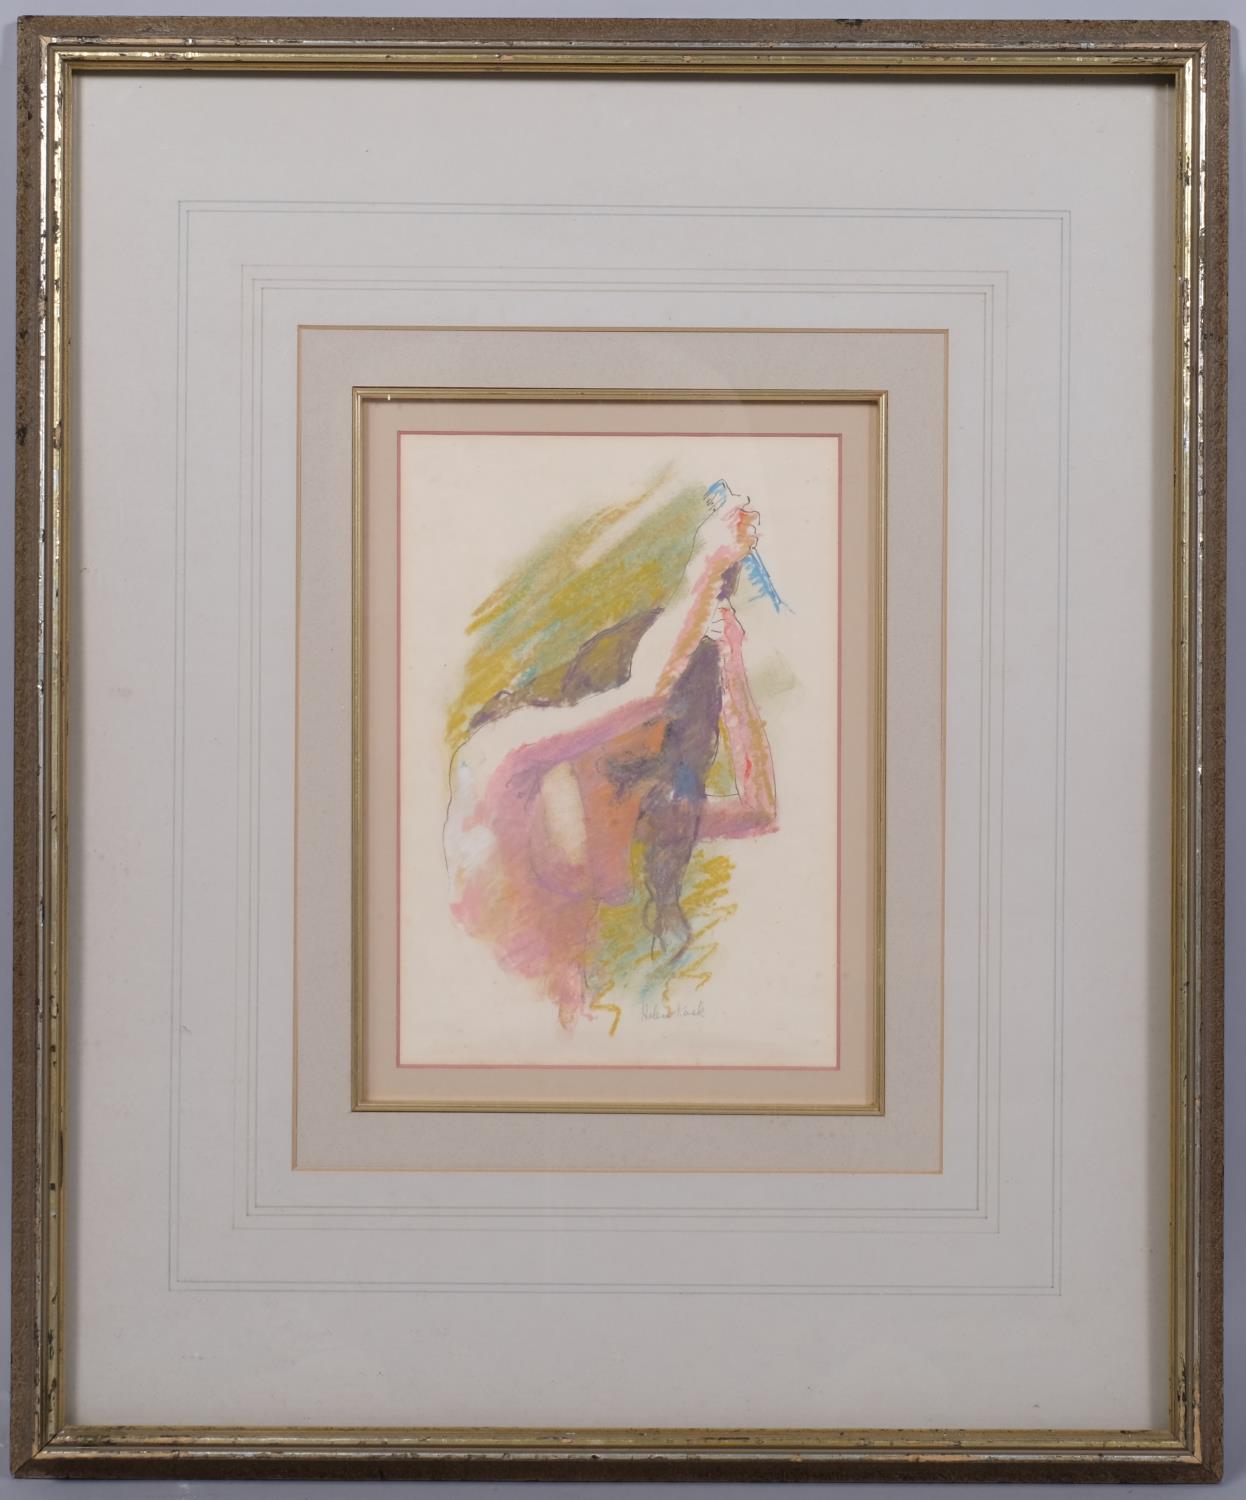 Helen Kask, nude study, coloured pastel, signed, 25cm x 17cm, framed - Image 2 of 4